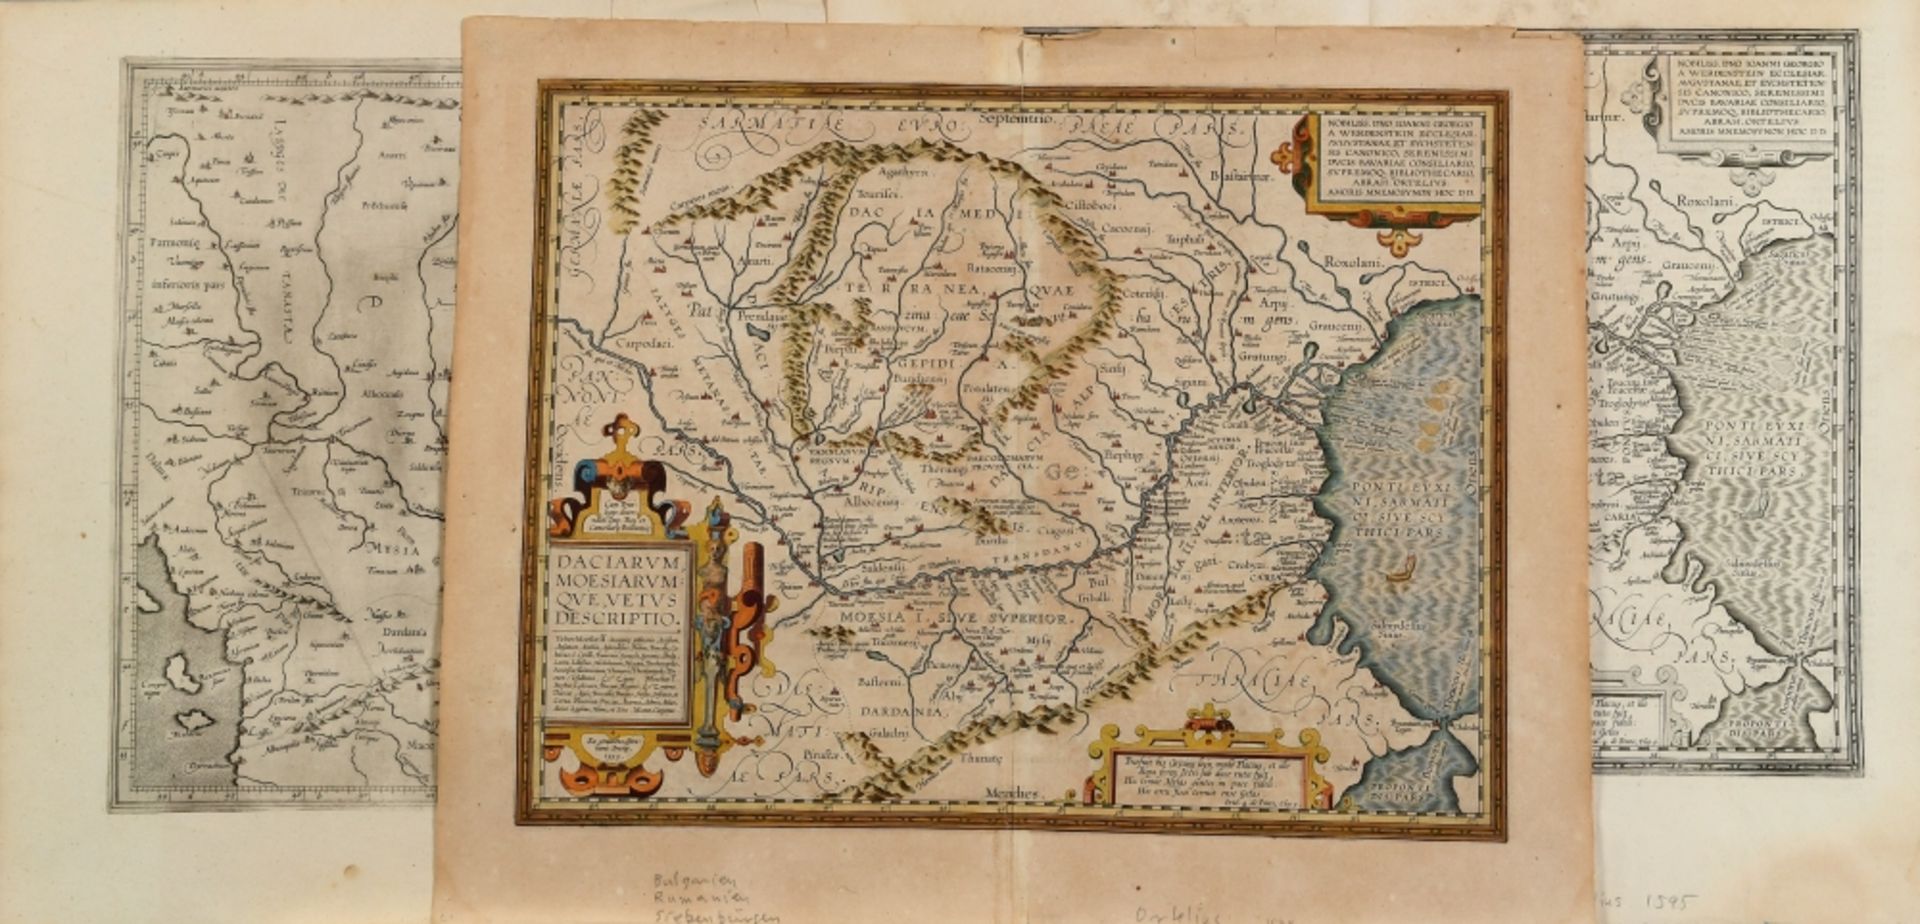 Landkarten, 3 Stück "Daciarum, Moesiarum...(Balkan)"